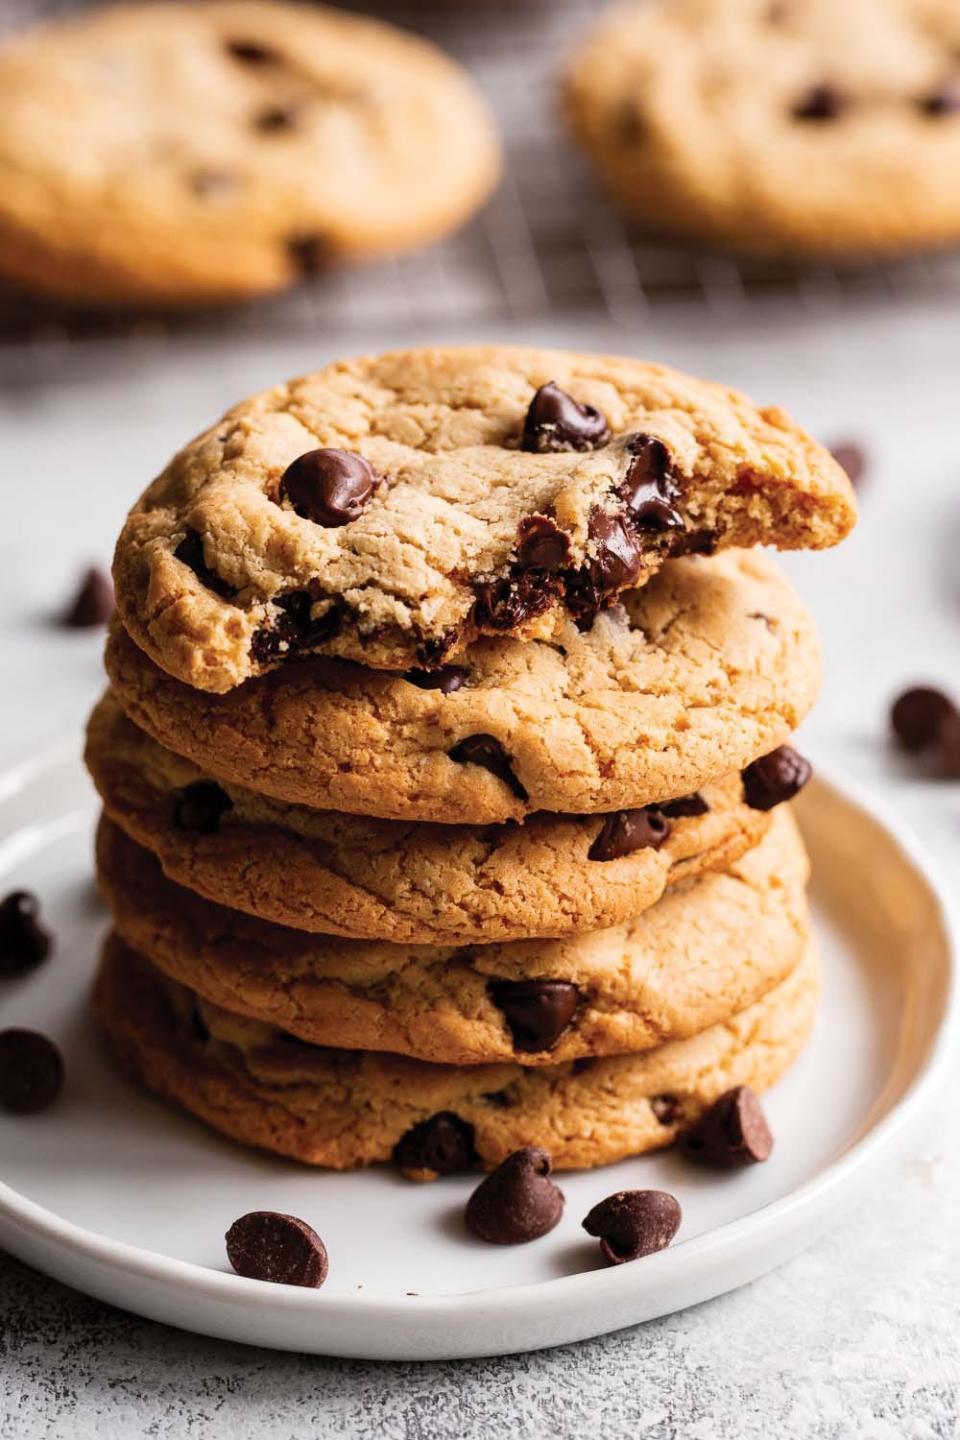 Michele Rosen’s chocolate chip cookies